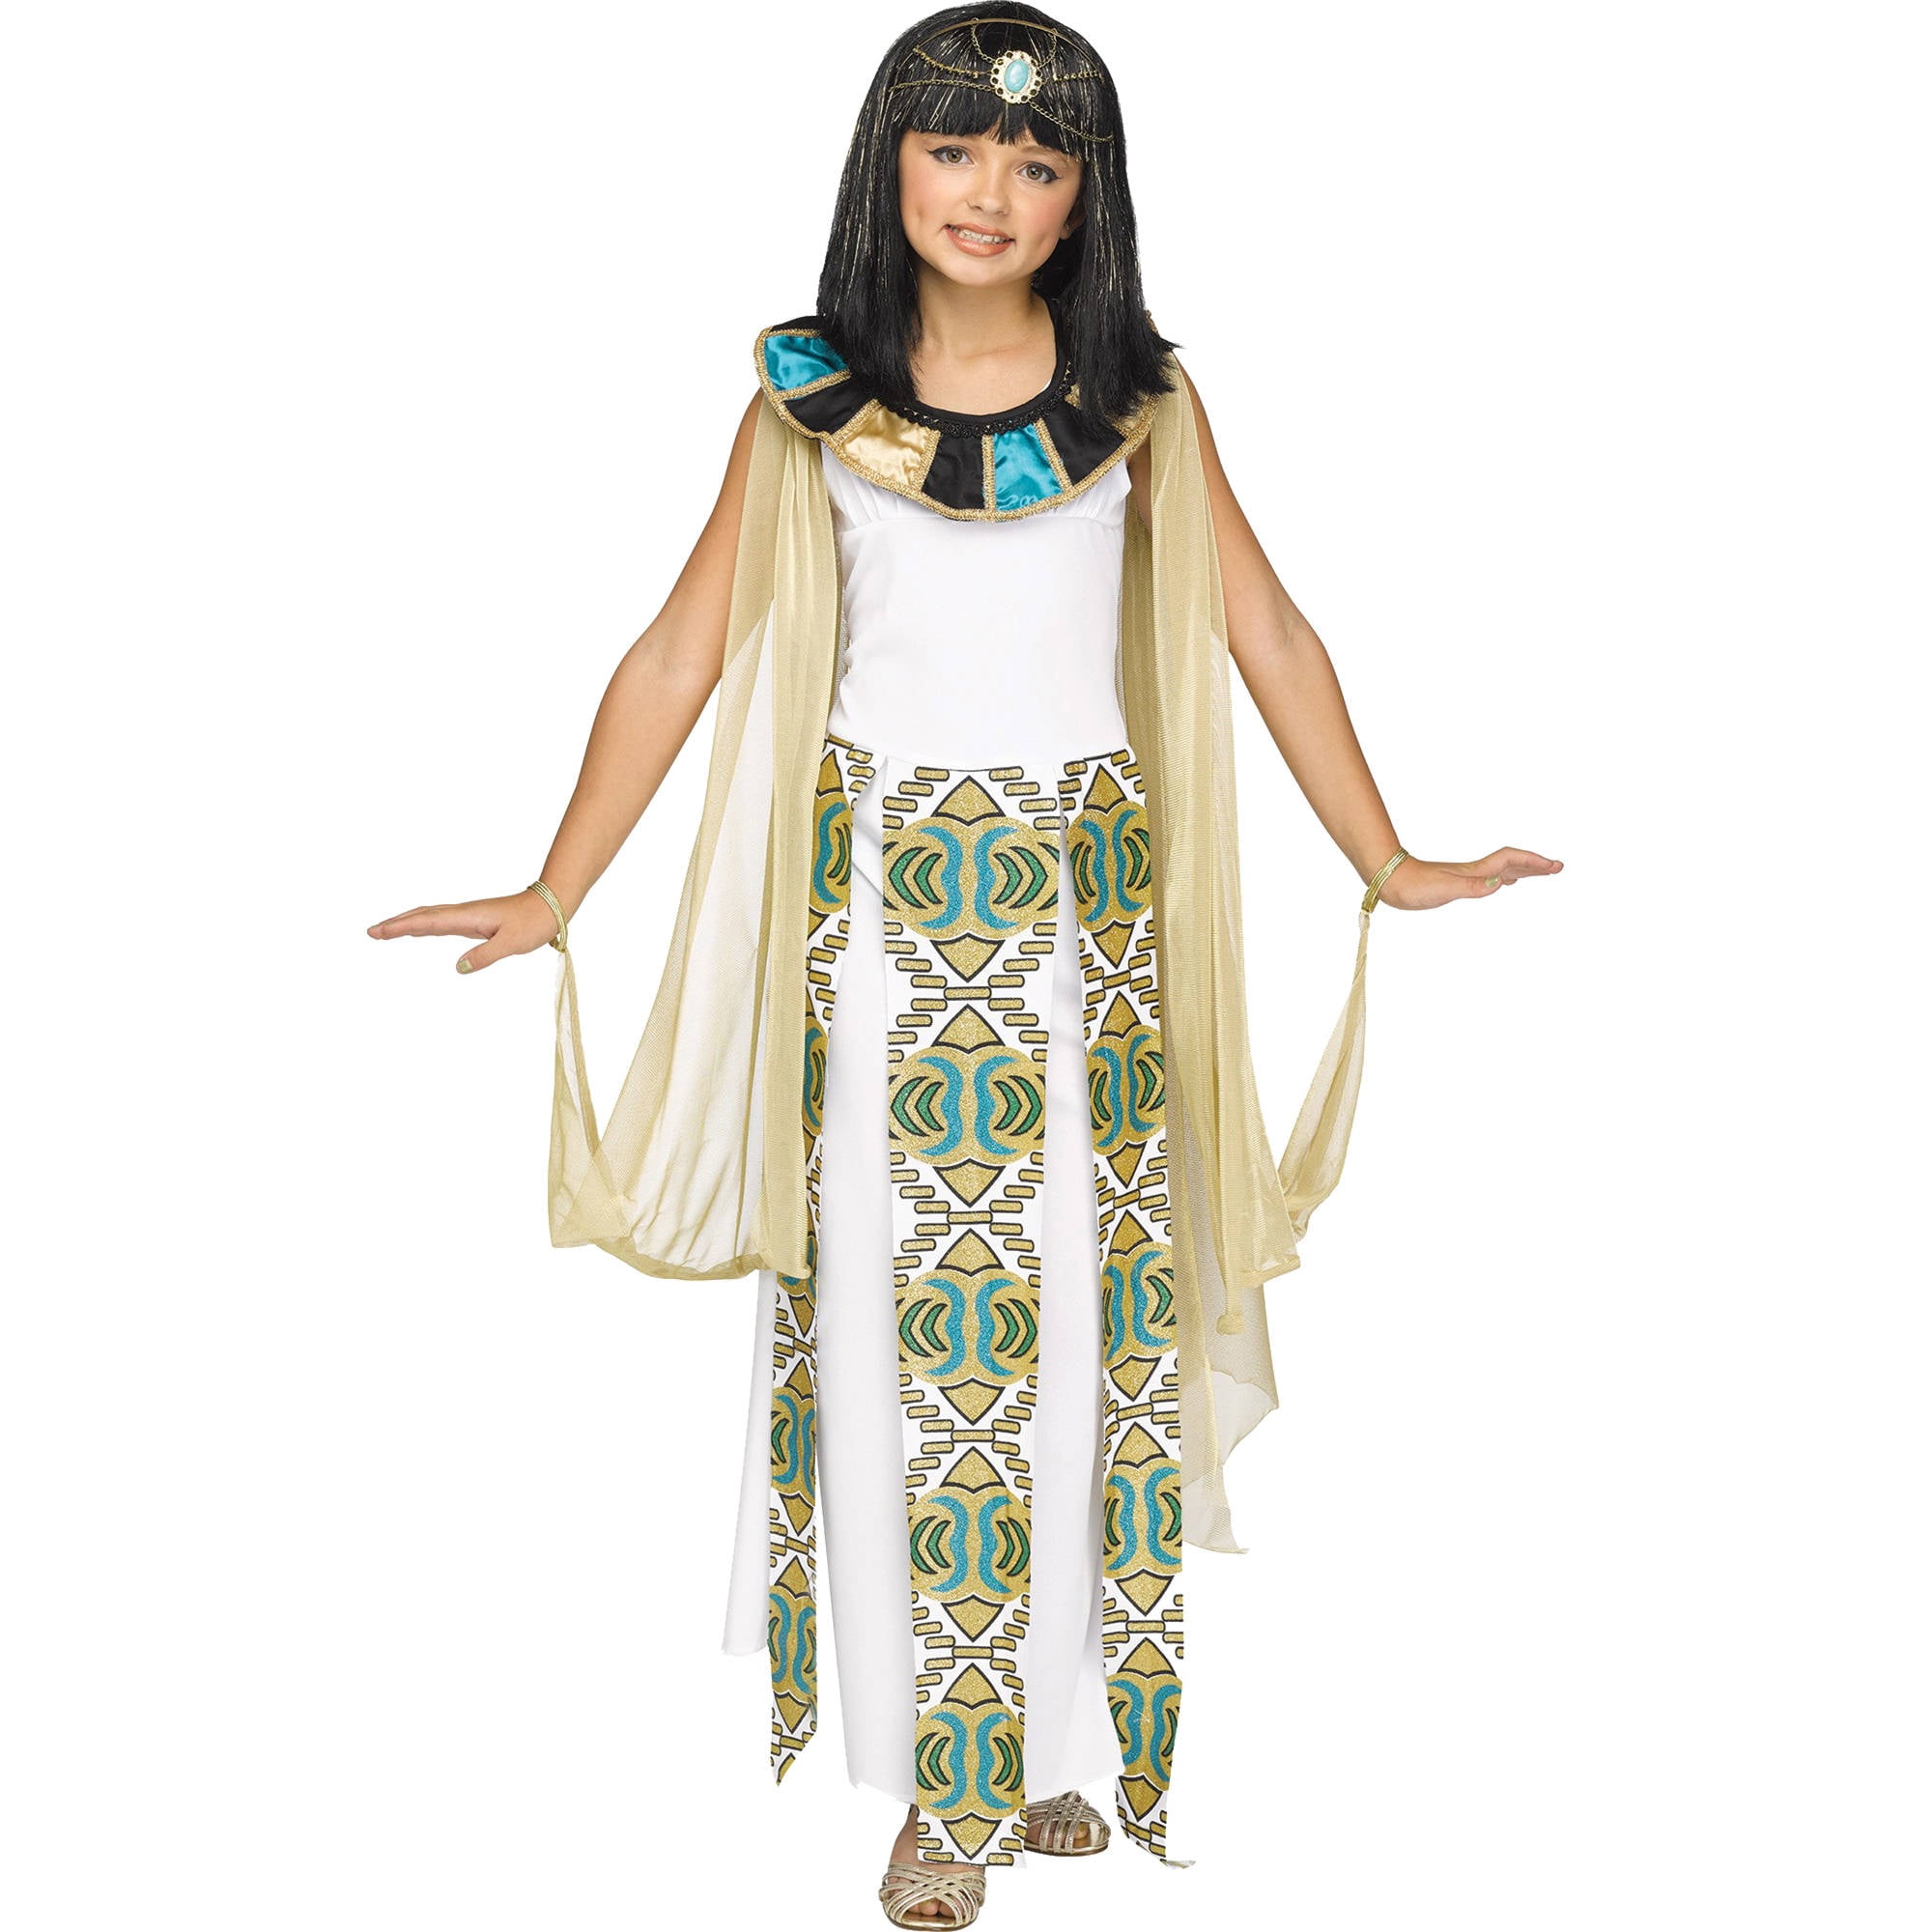 GIRLS EGYPTIAN GIRL CLEOPATRA KIDS FANCY DRESS COSTUME WORLD BOOK DAY WEEK OUTFI 